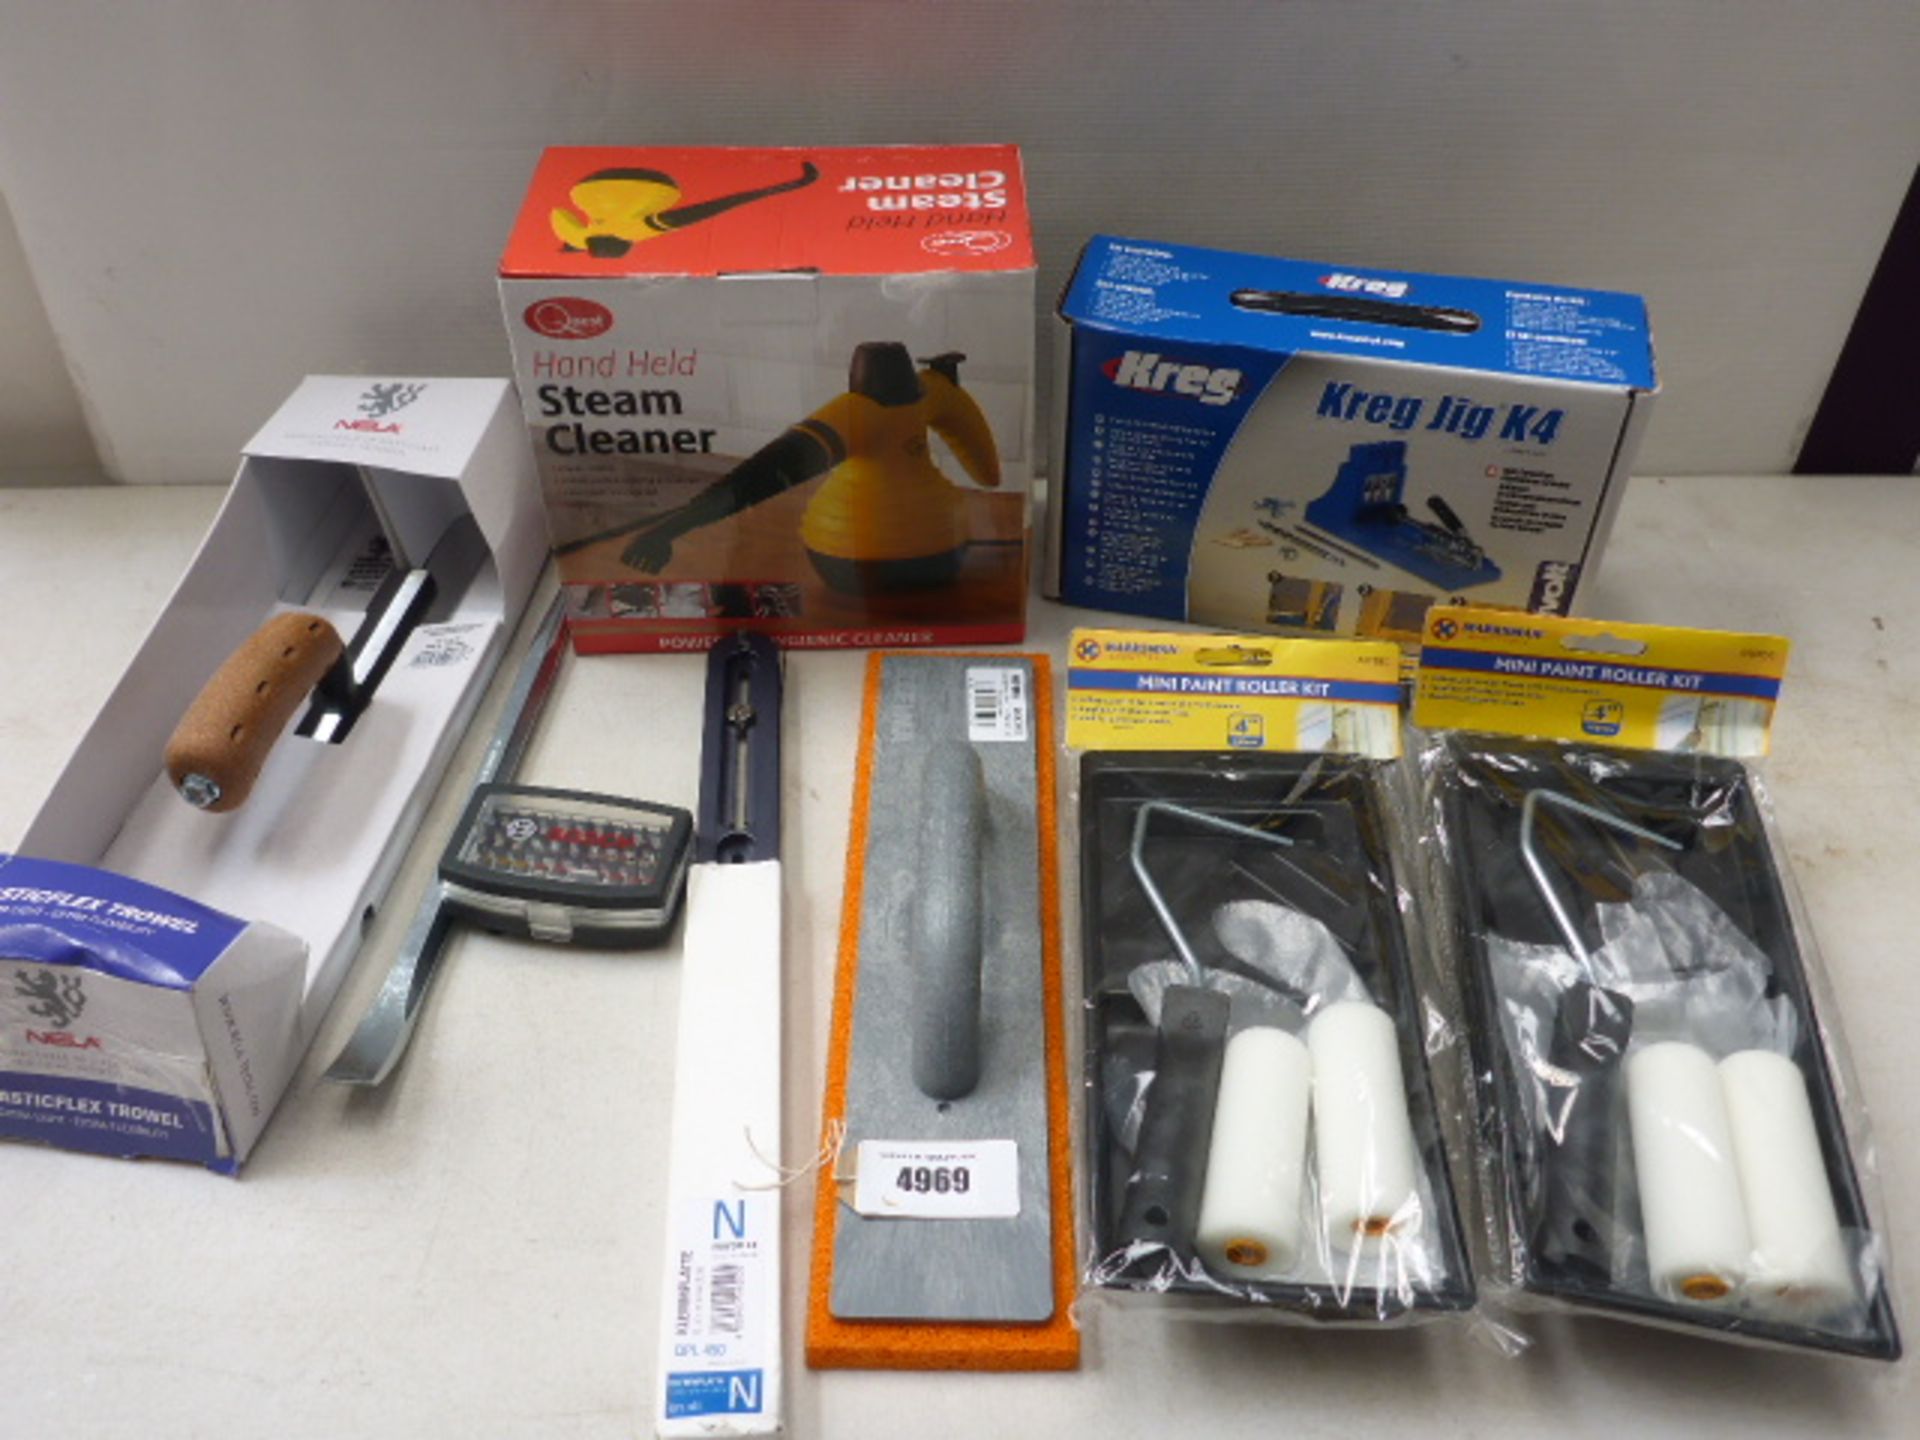 Hand held steam cleaner, Kreg jig kit, plastic flex trowel, flat sponge and paint roller sets